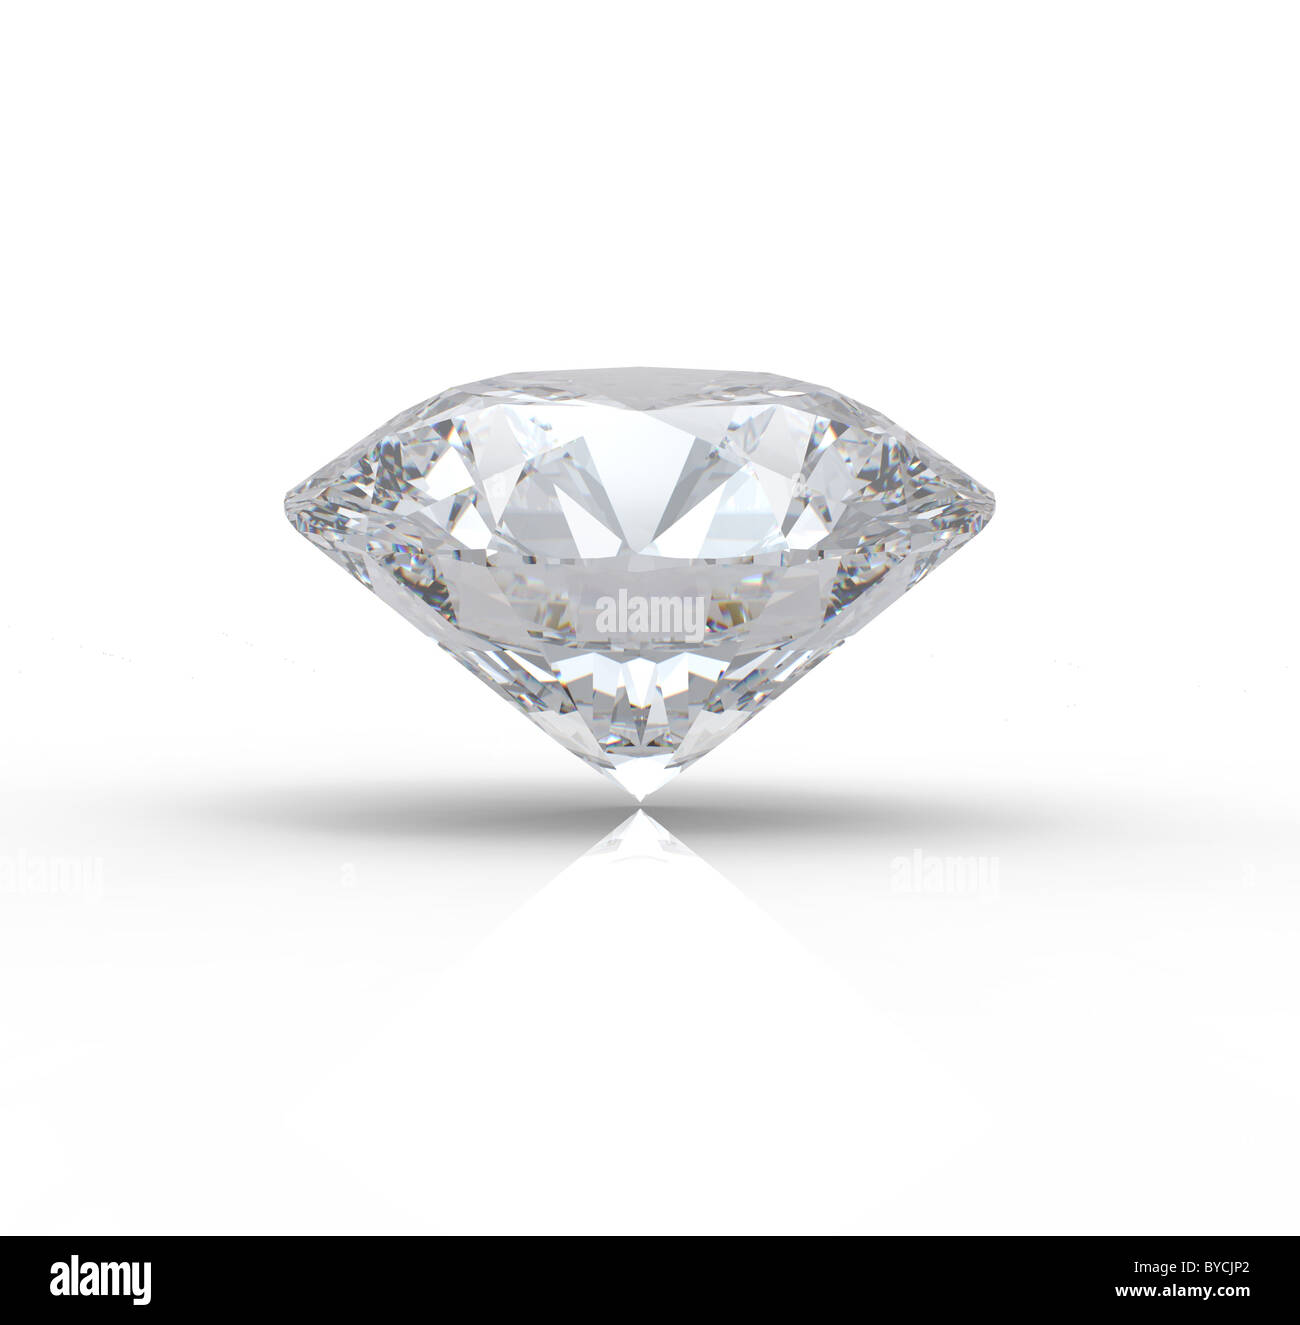 Diamante sobre fondo blanco fotografías e imágenes de alta resolución -  Alamy